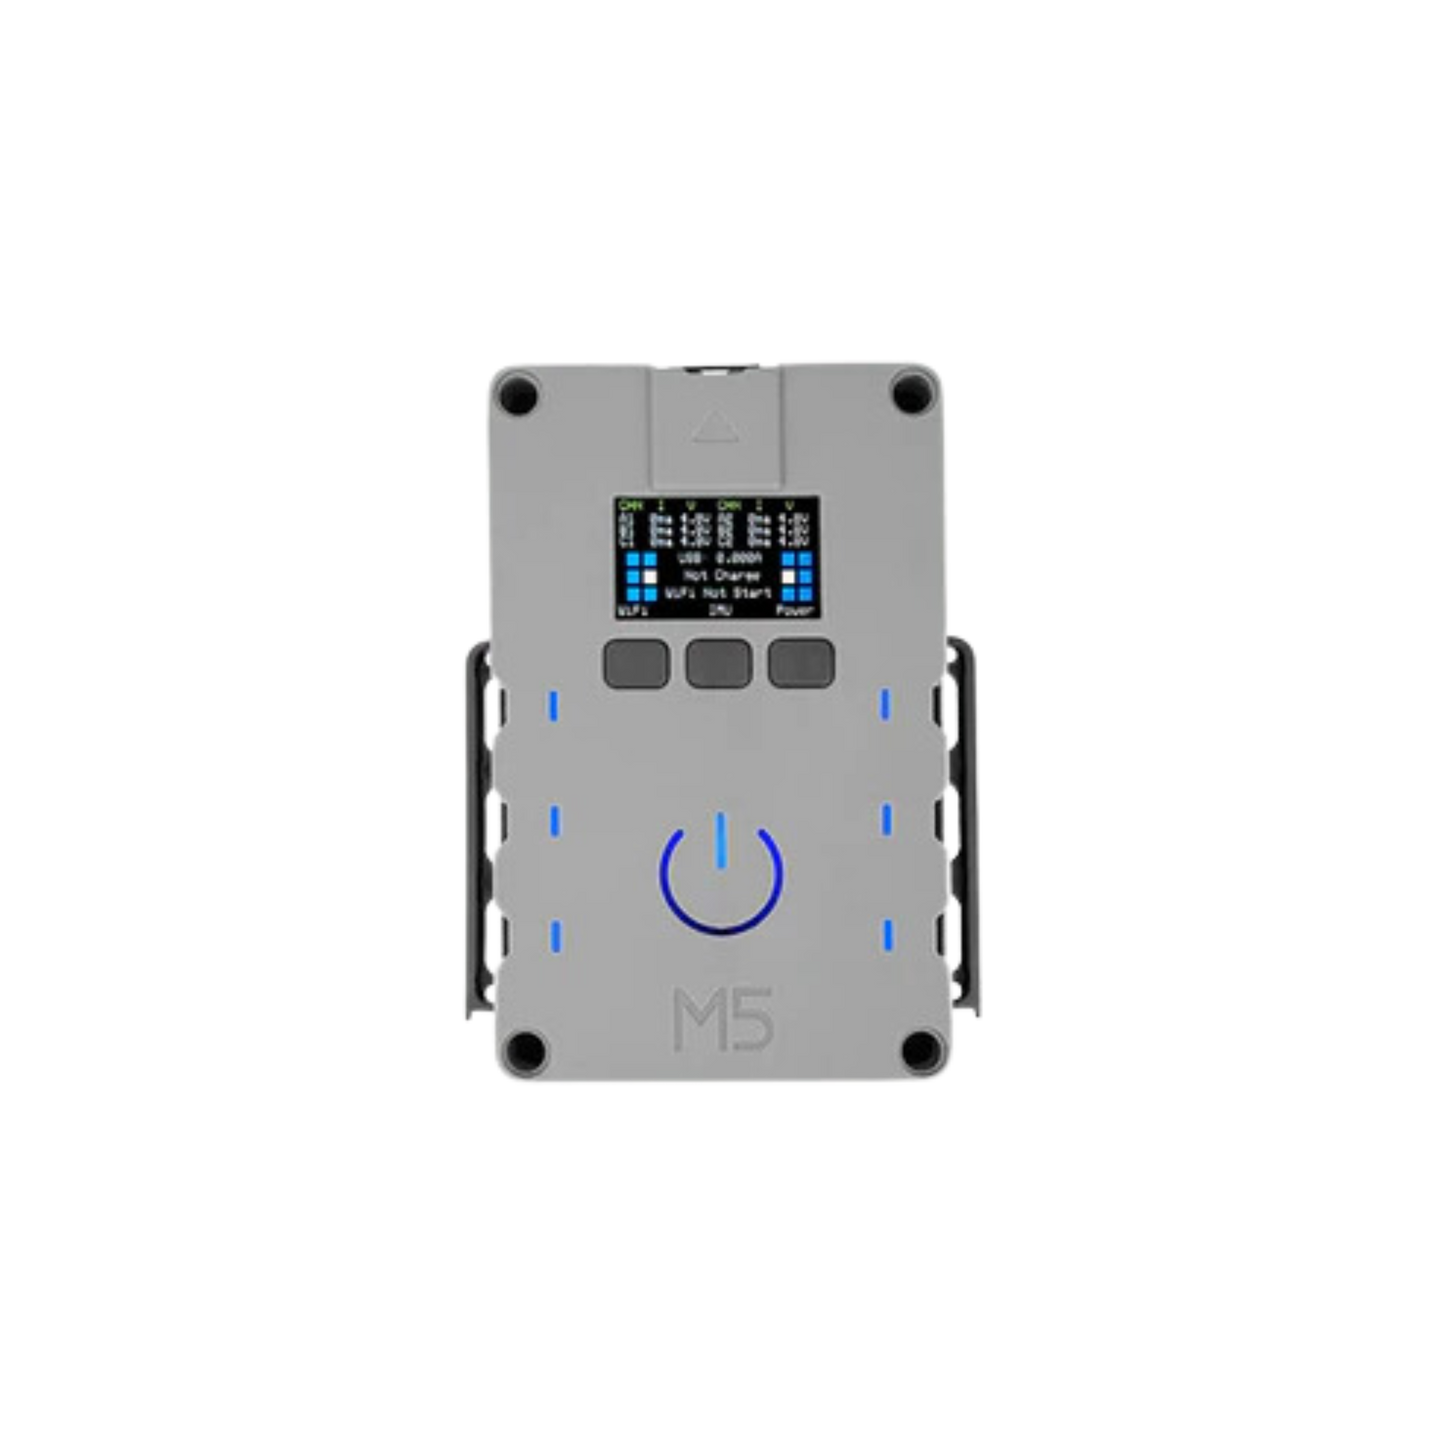 M5Stack Station ESP32 IoT Development Kit RS485 Version | Battery Version